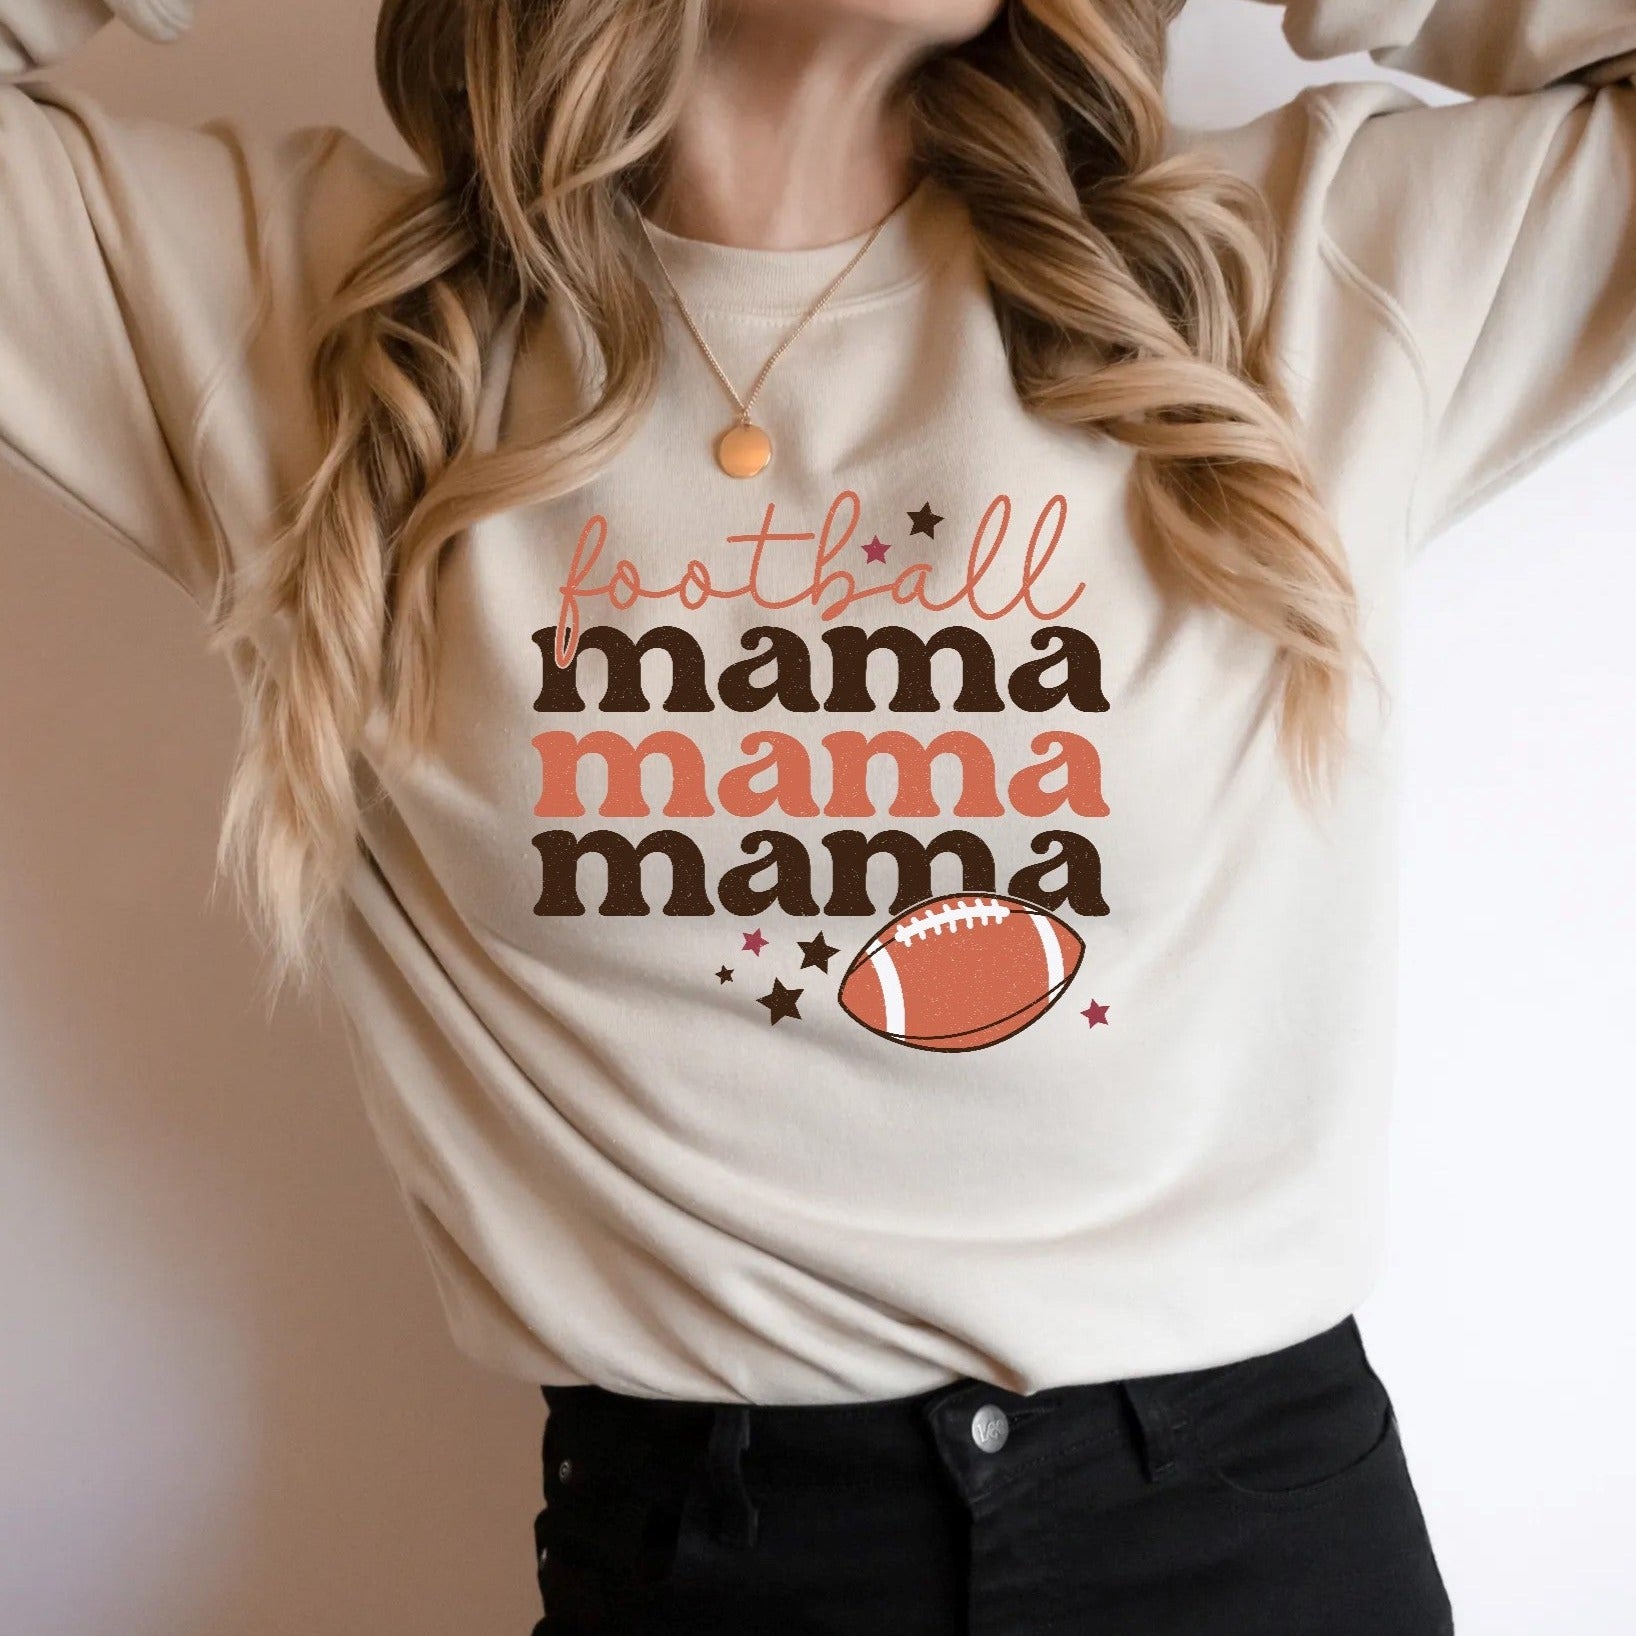 Retro Football Mama Sweatshirt in Sand Color